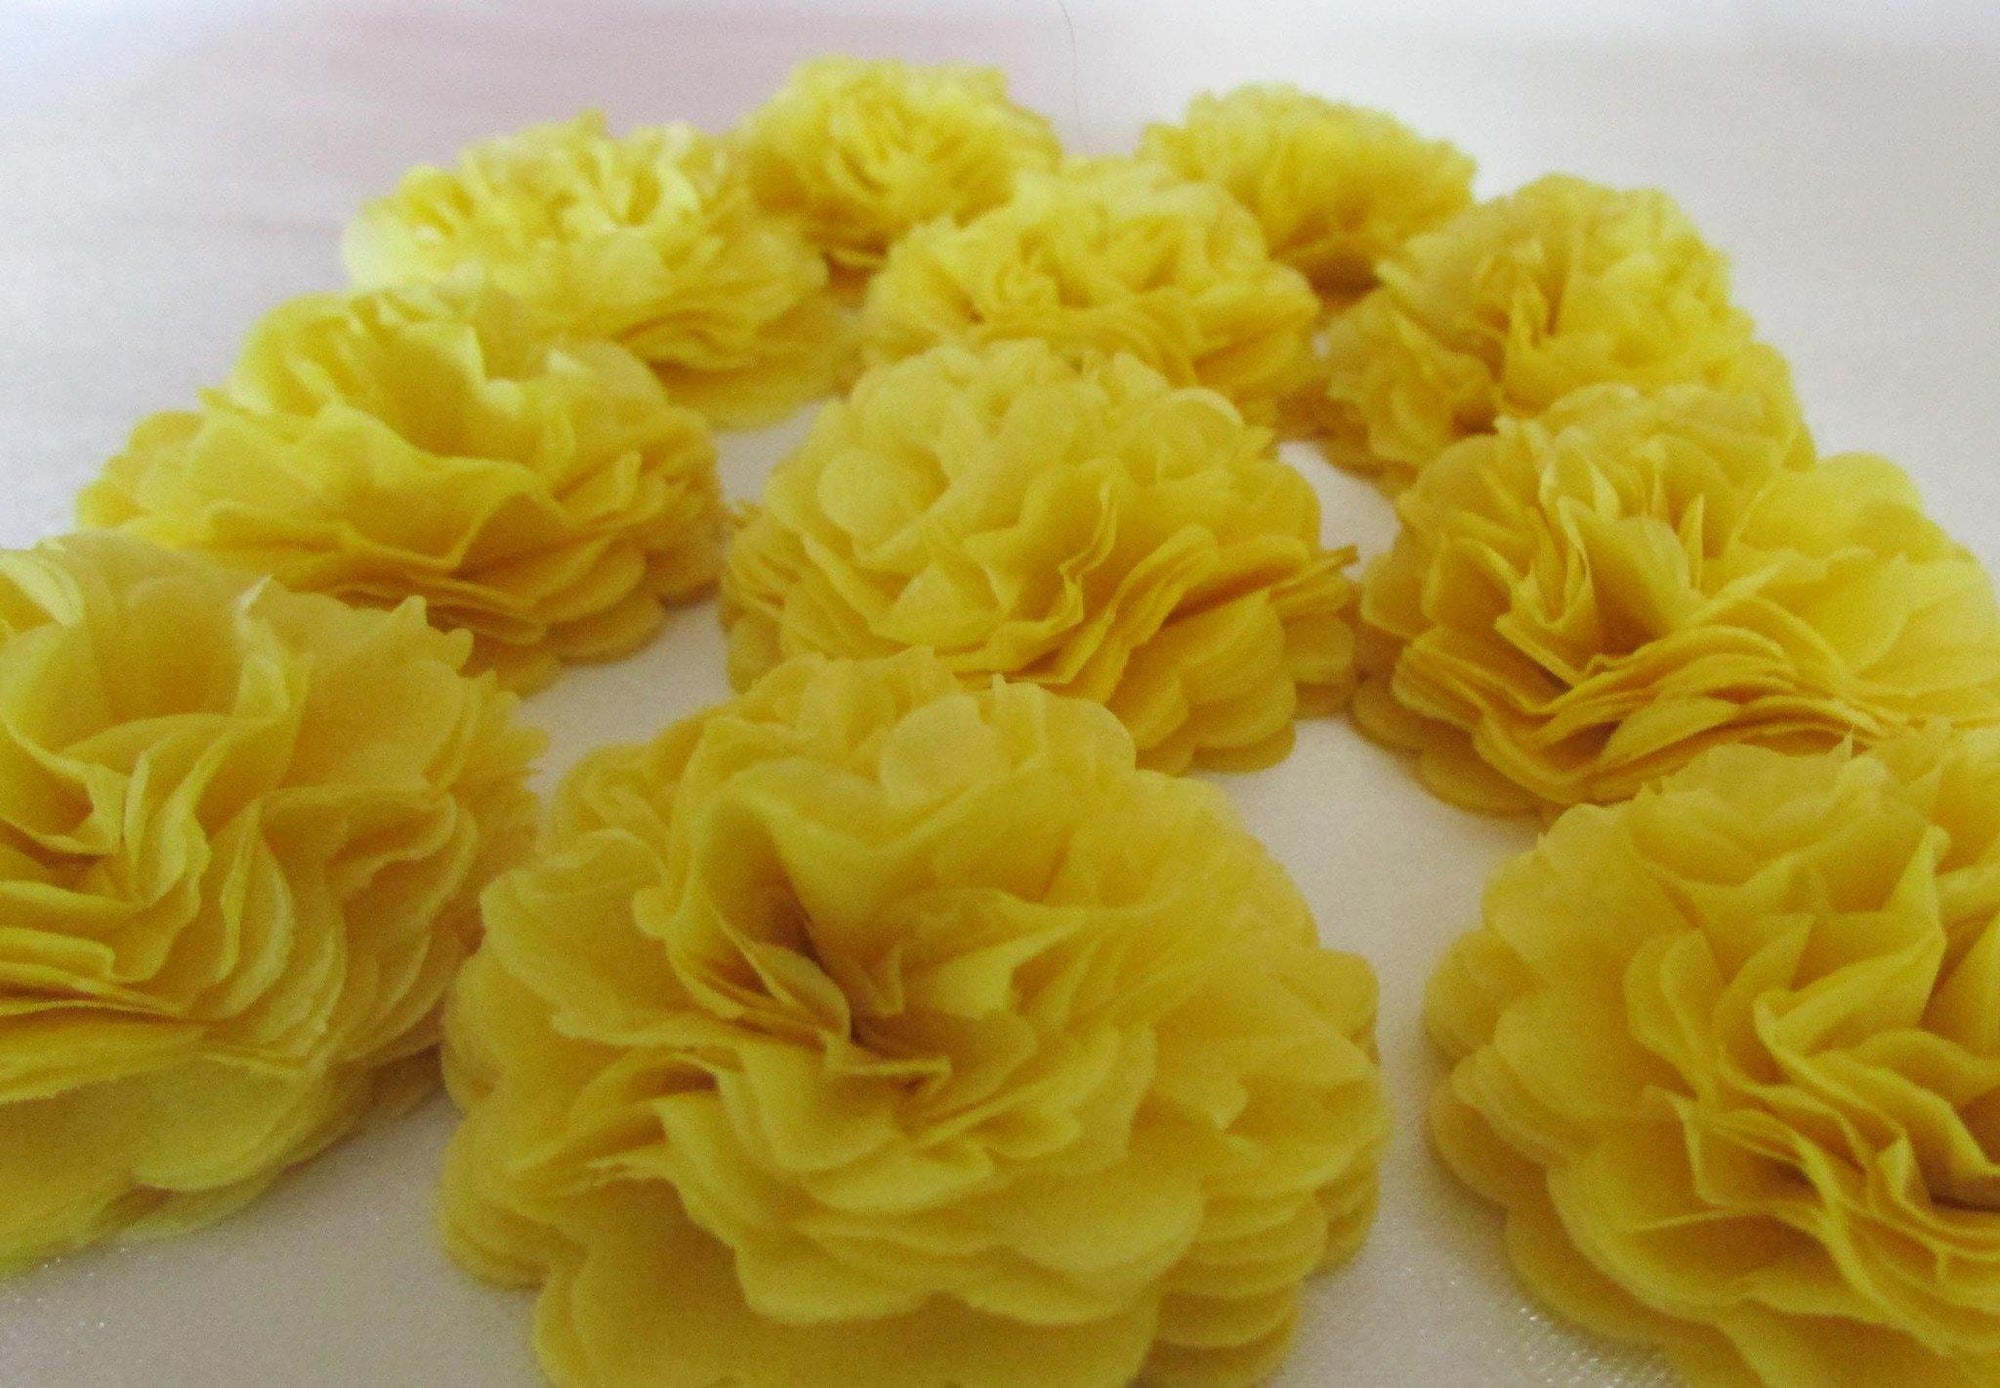 Yellow Button Mums Tissue Paper Flowers - Bickiboo Designs